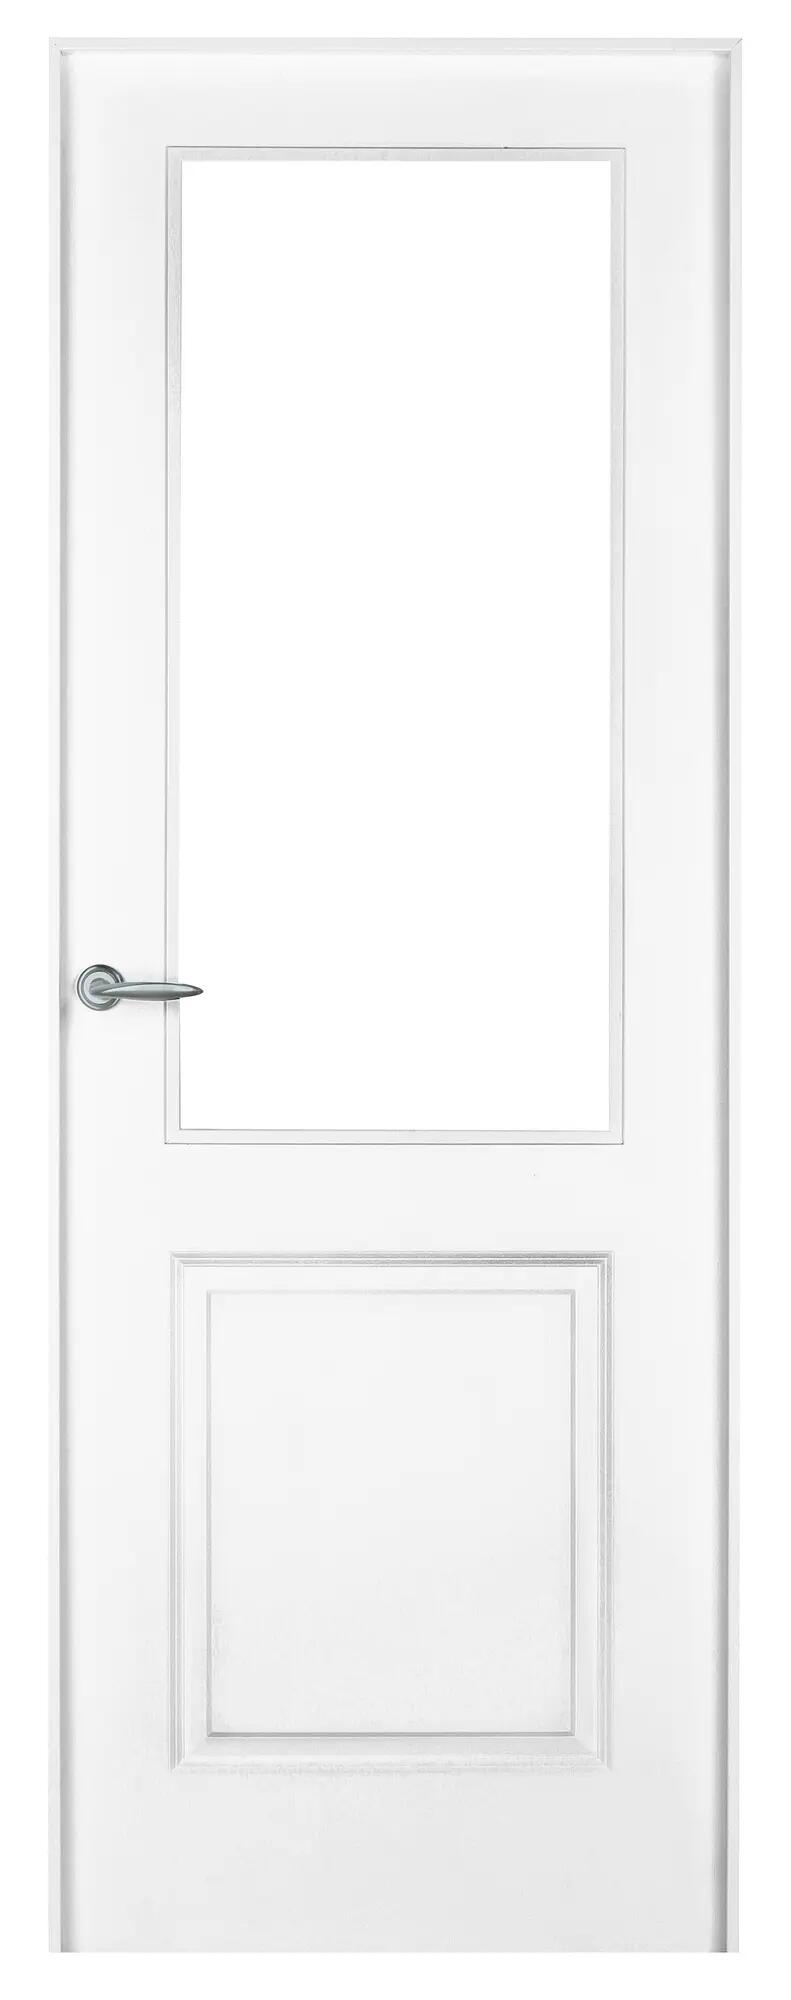 Puerta bonn blanco apertura izquierda con cristal 72.5cm